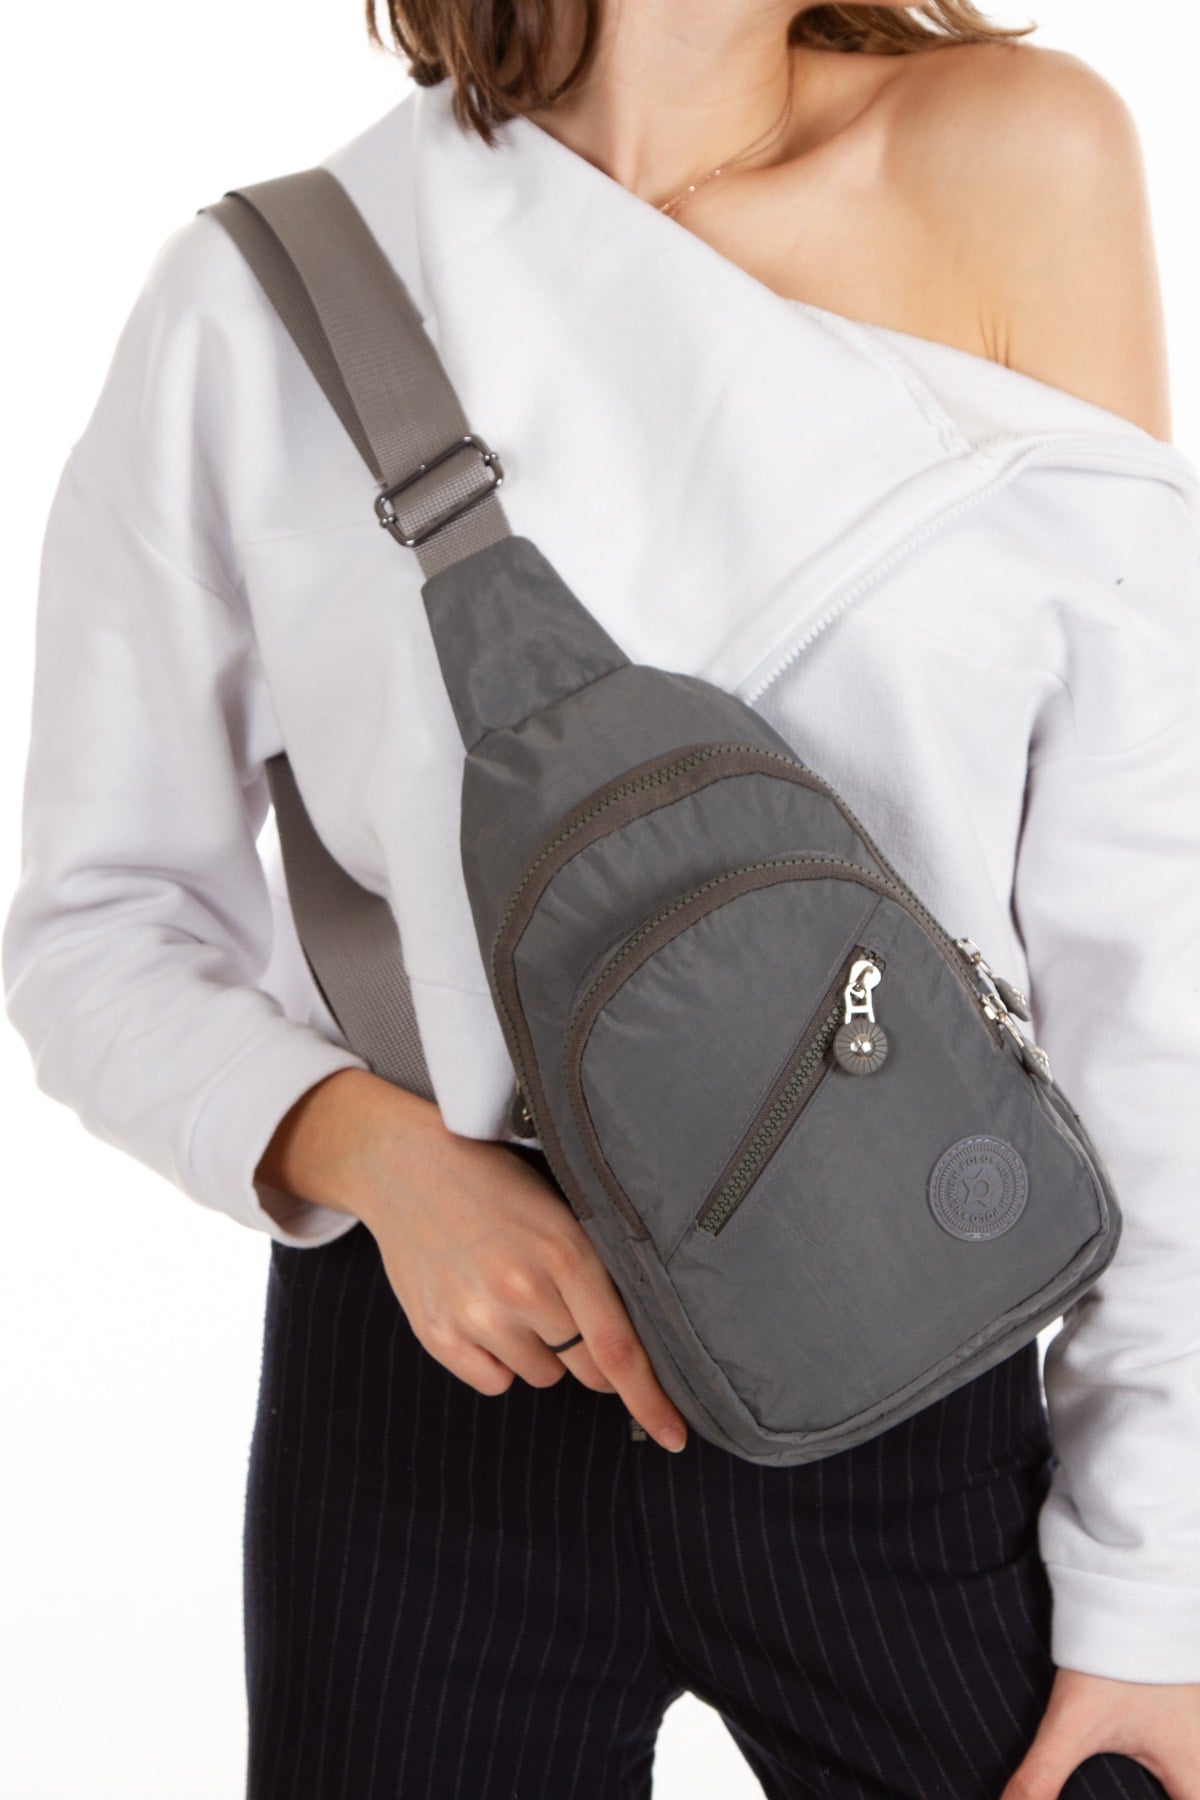 Unisex Crinkle Waterproof Bag, Crossbody Shoulder And Chest Bag, Bodybag, Gray Color